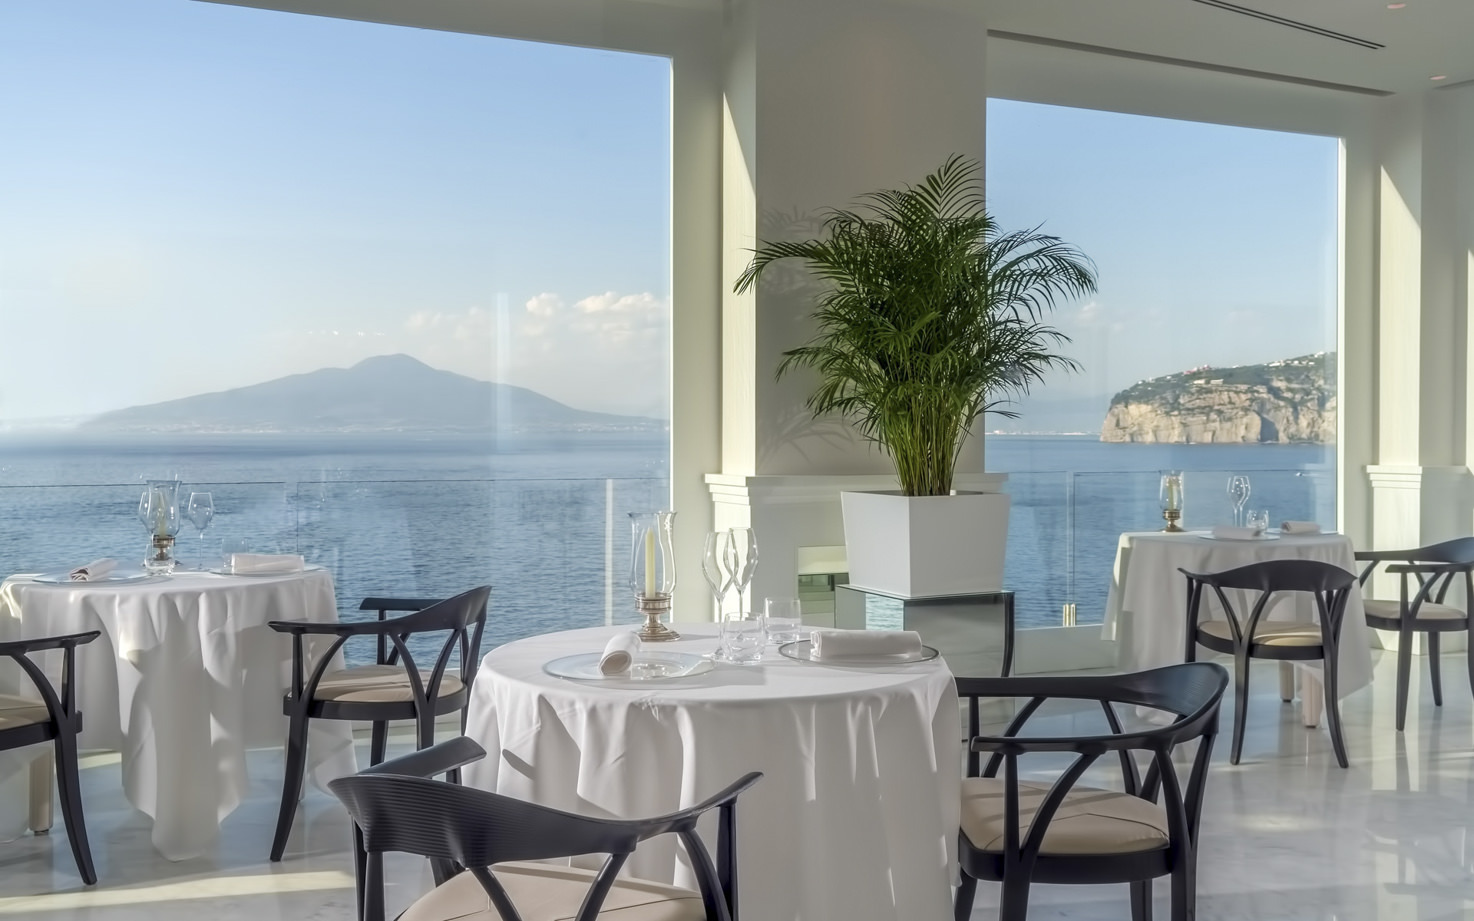 Restaurant with sea view over Mt. Vesuvius